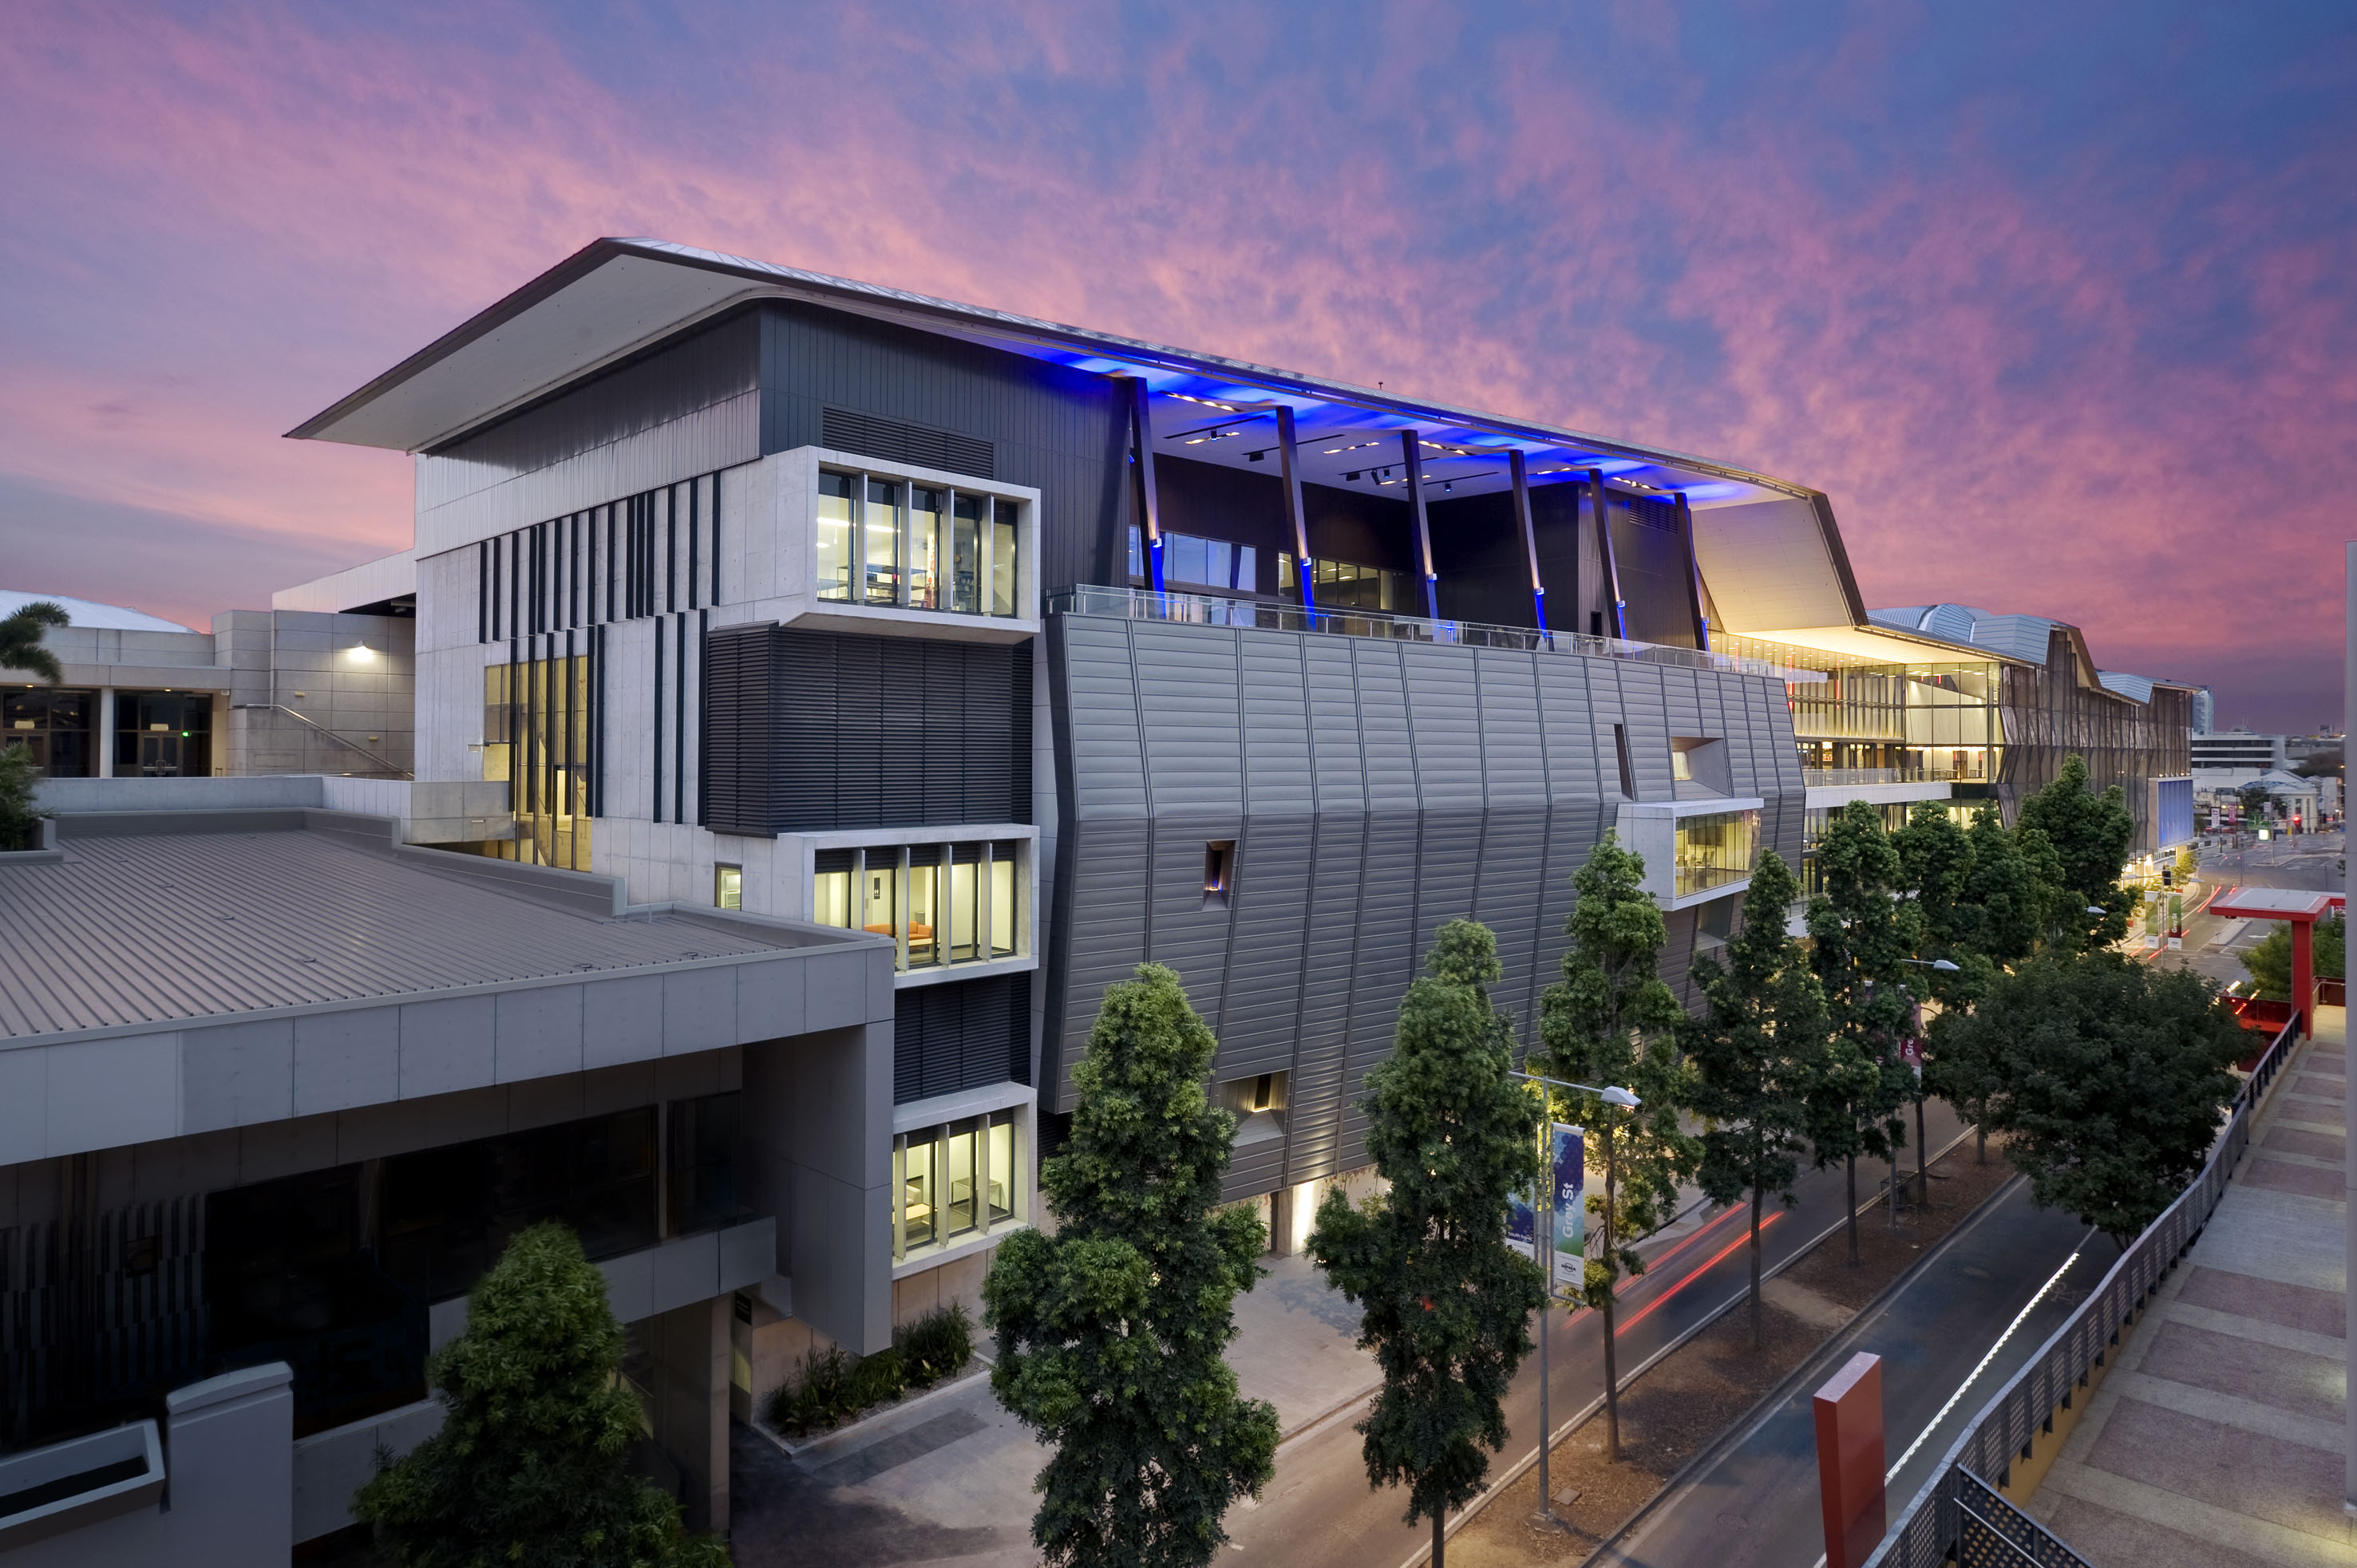 Brisbane Convention and Exhibition Centre